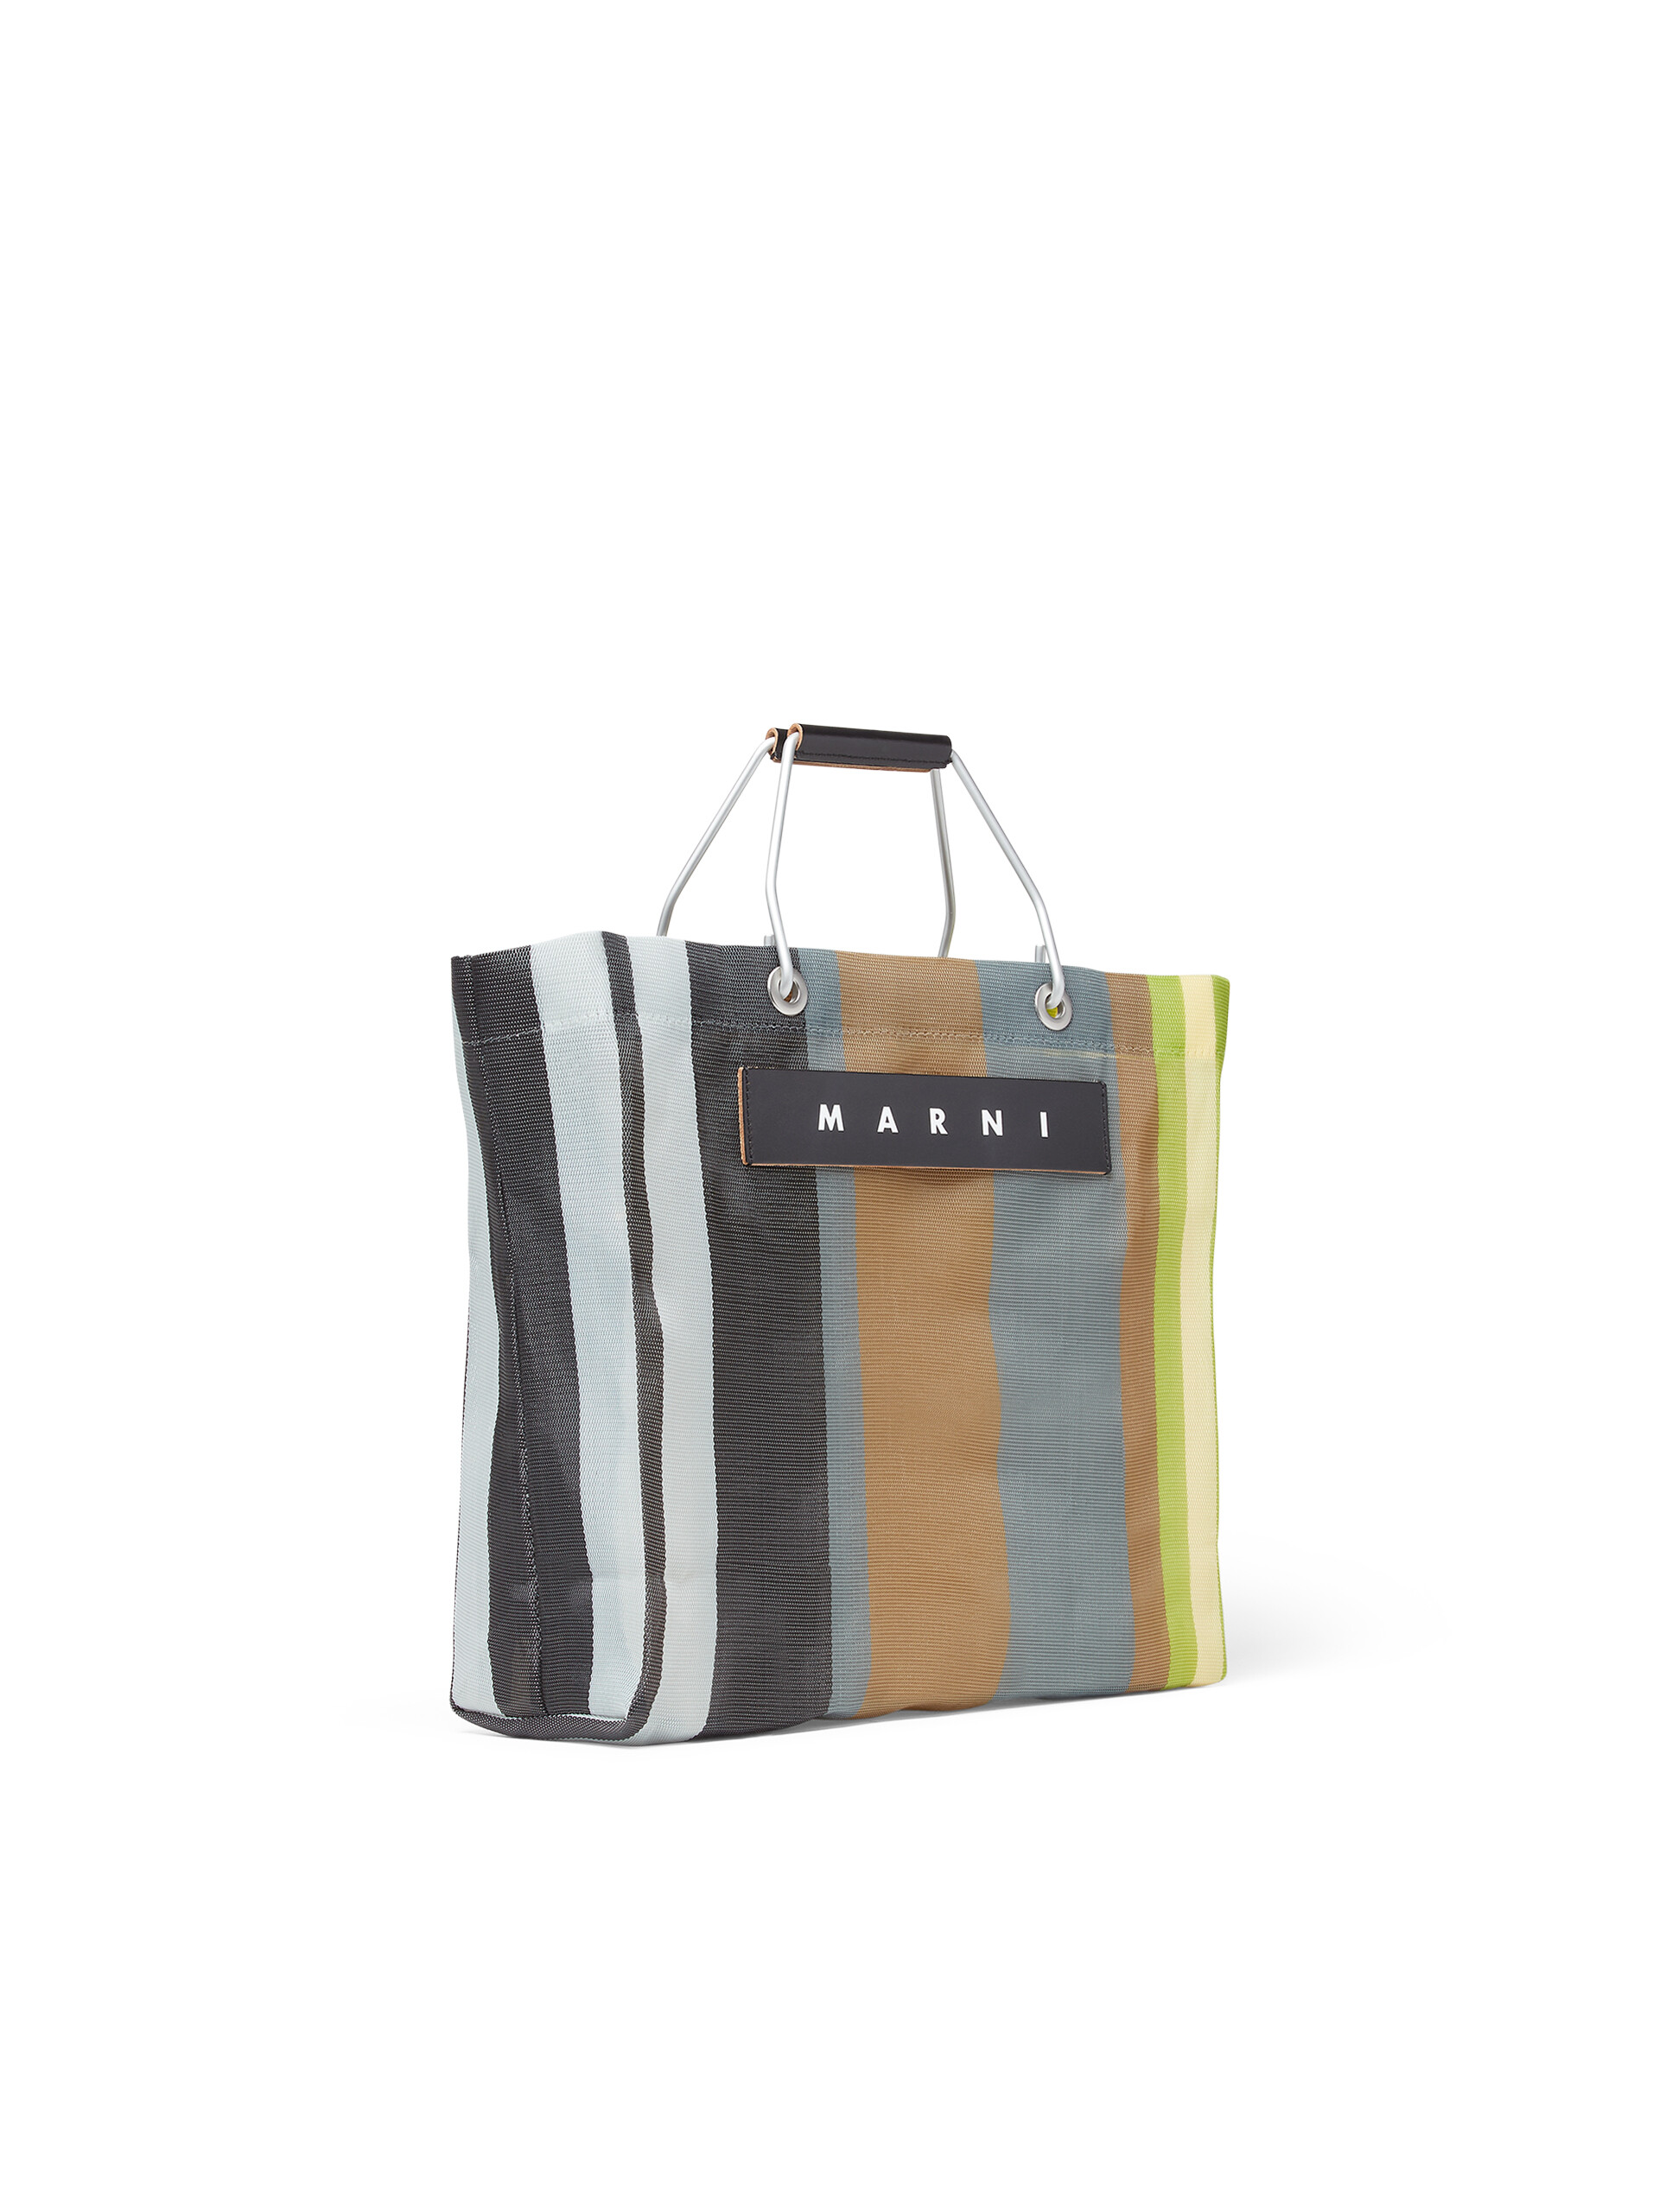 MARNI MARKET STRIPE multicolor grey bag - Bags - Image 2